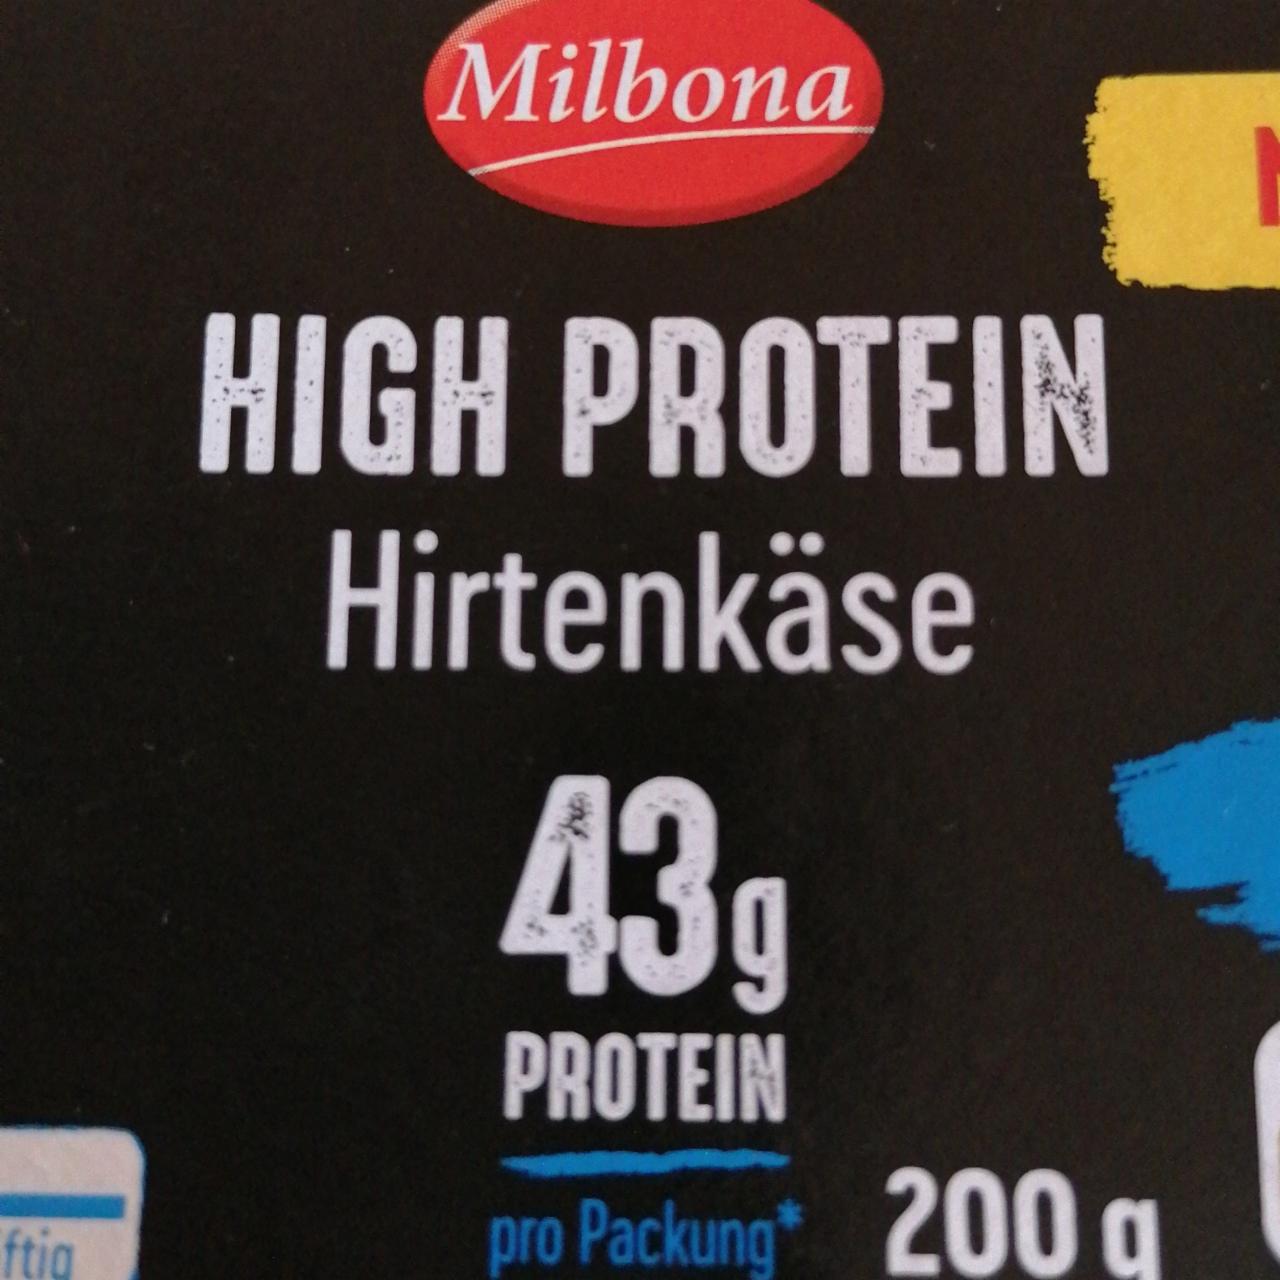 Fotografie - High Protein Hirtenkäse Natur 43g protein Milbona